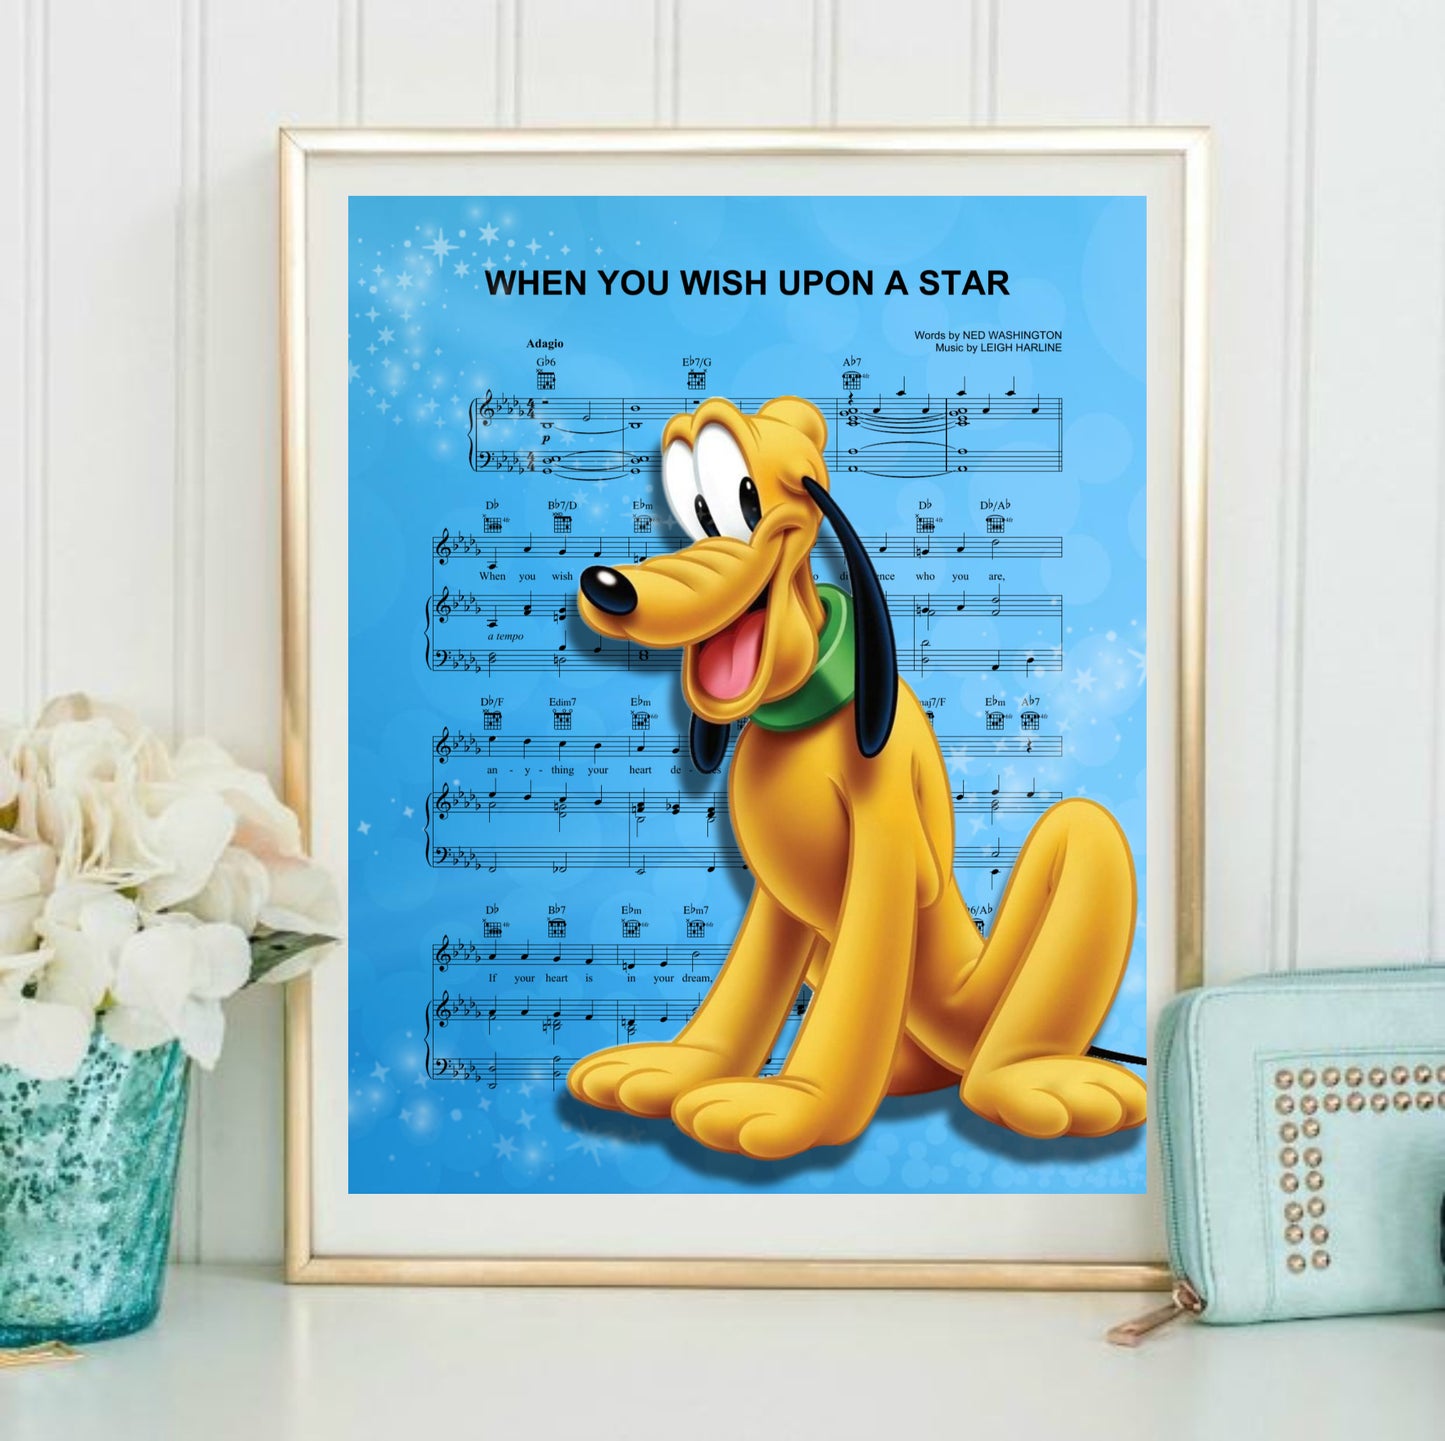 When you wish upon a star sheet music art